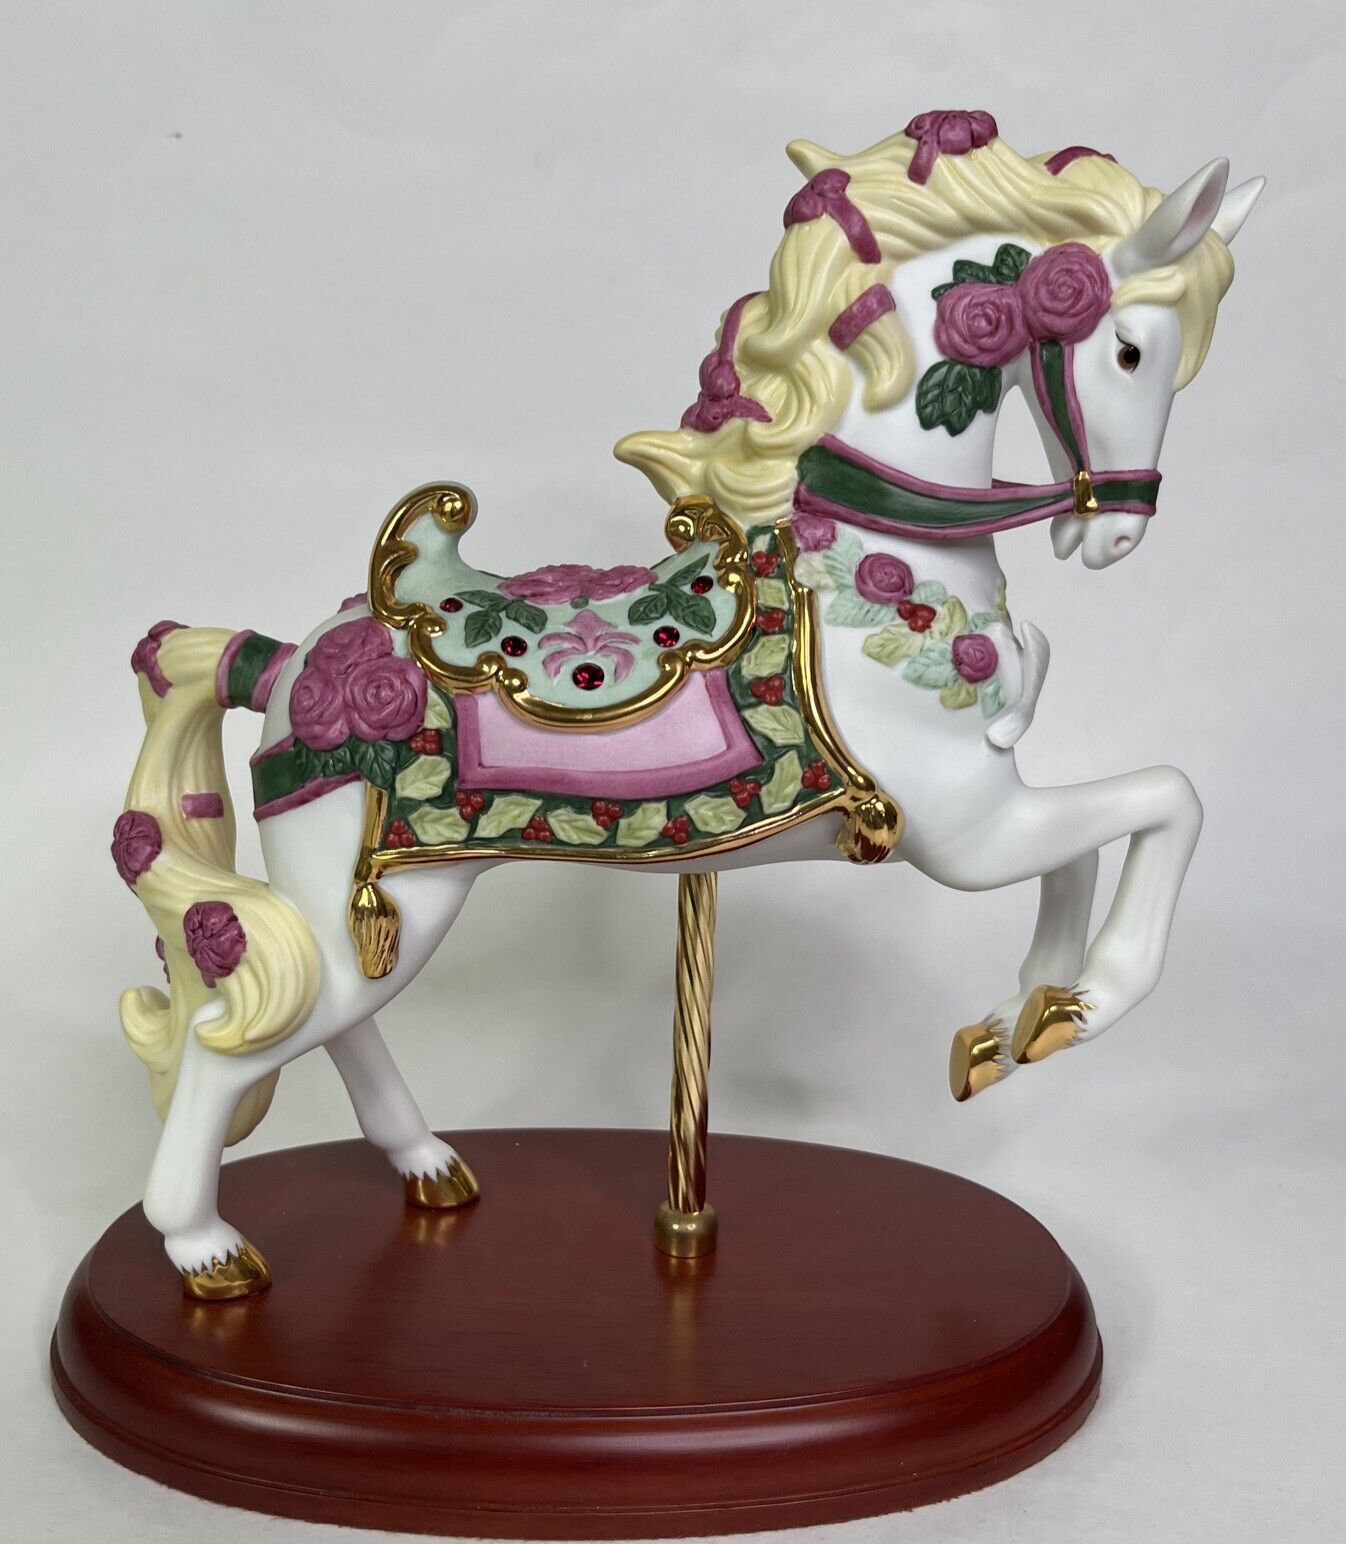 Lenox Porcelain Rubies And Roses Carousel Horse Ltd Ed 2009 Figurine In Orig.Box